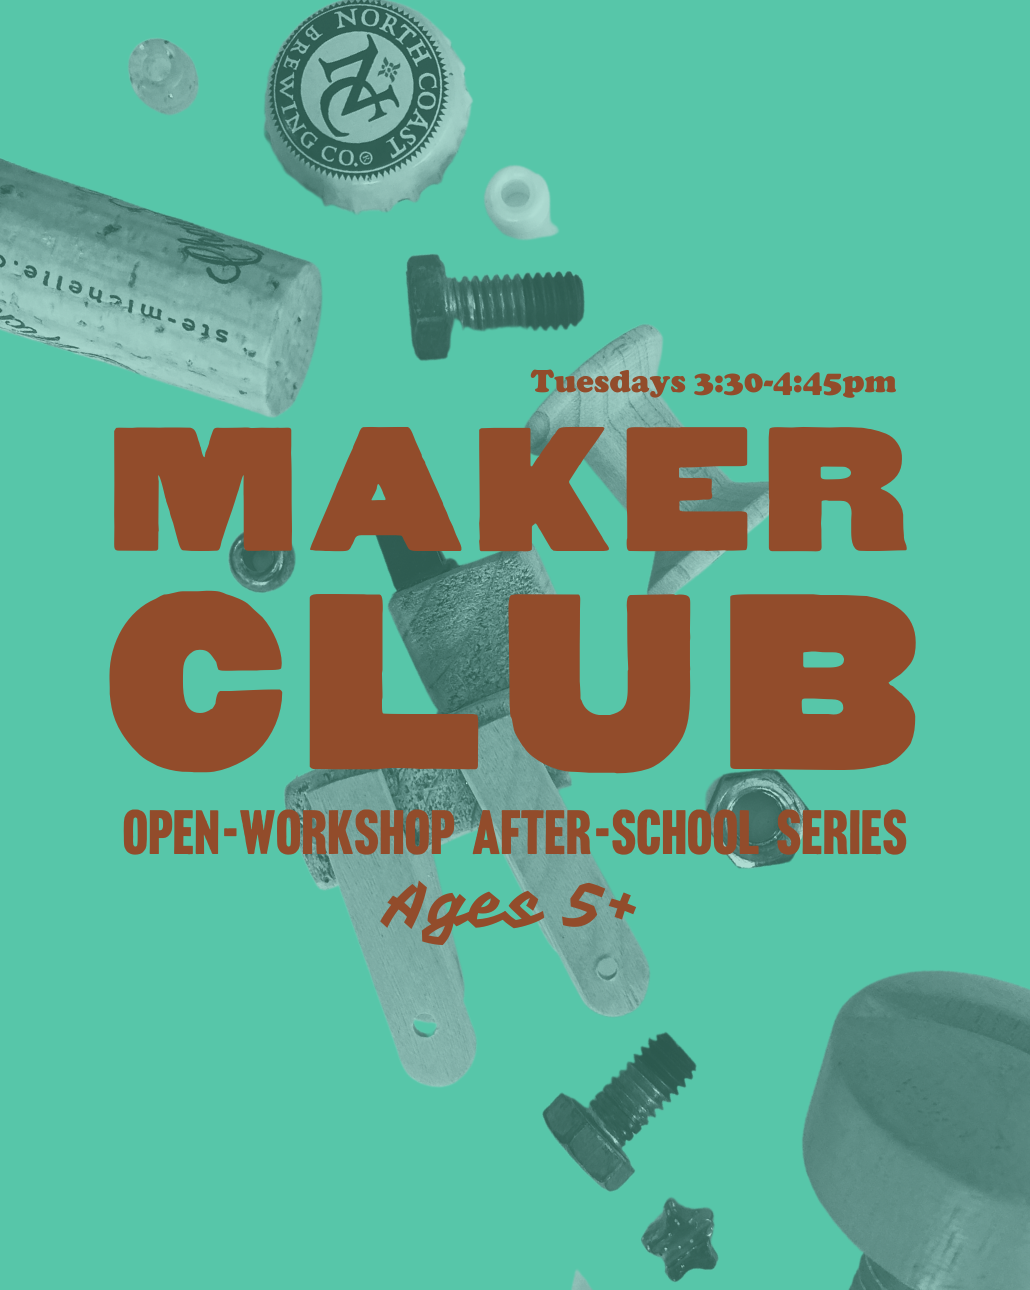 Maker Club